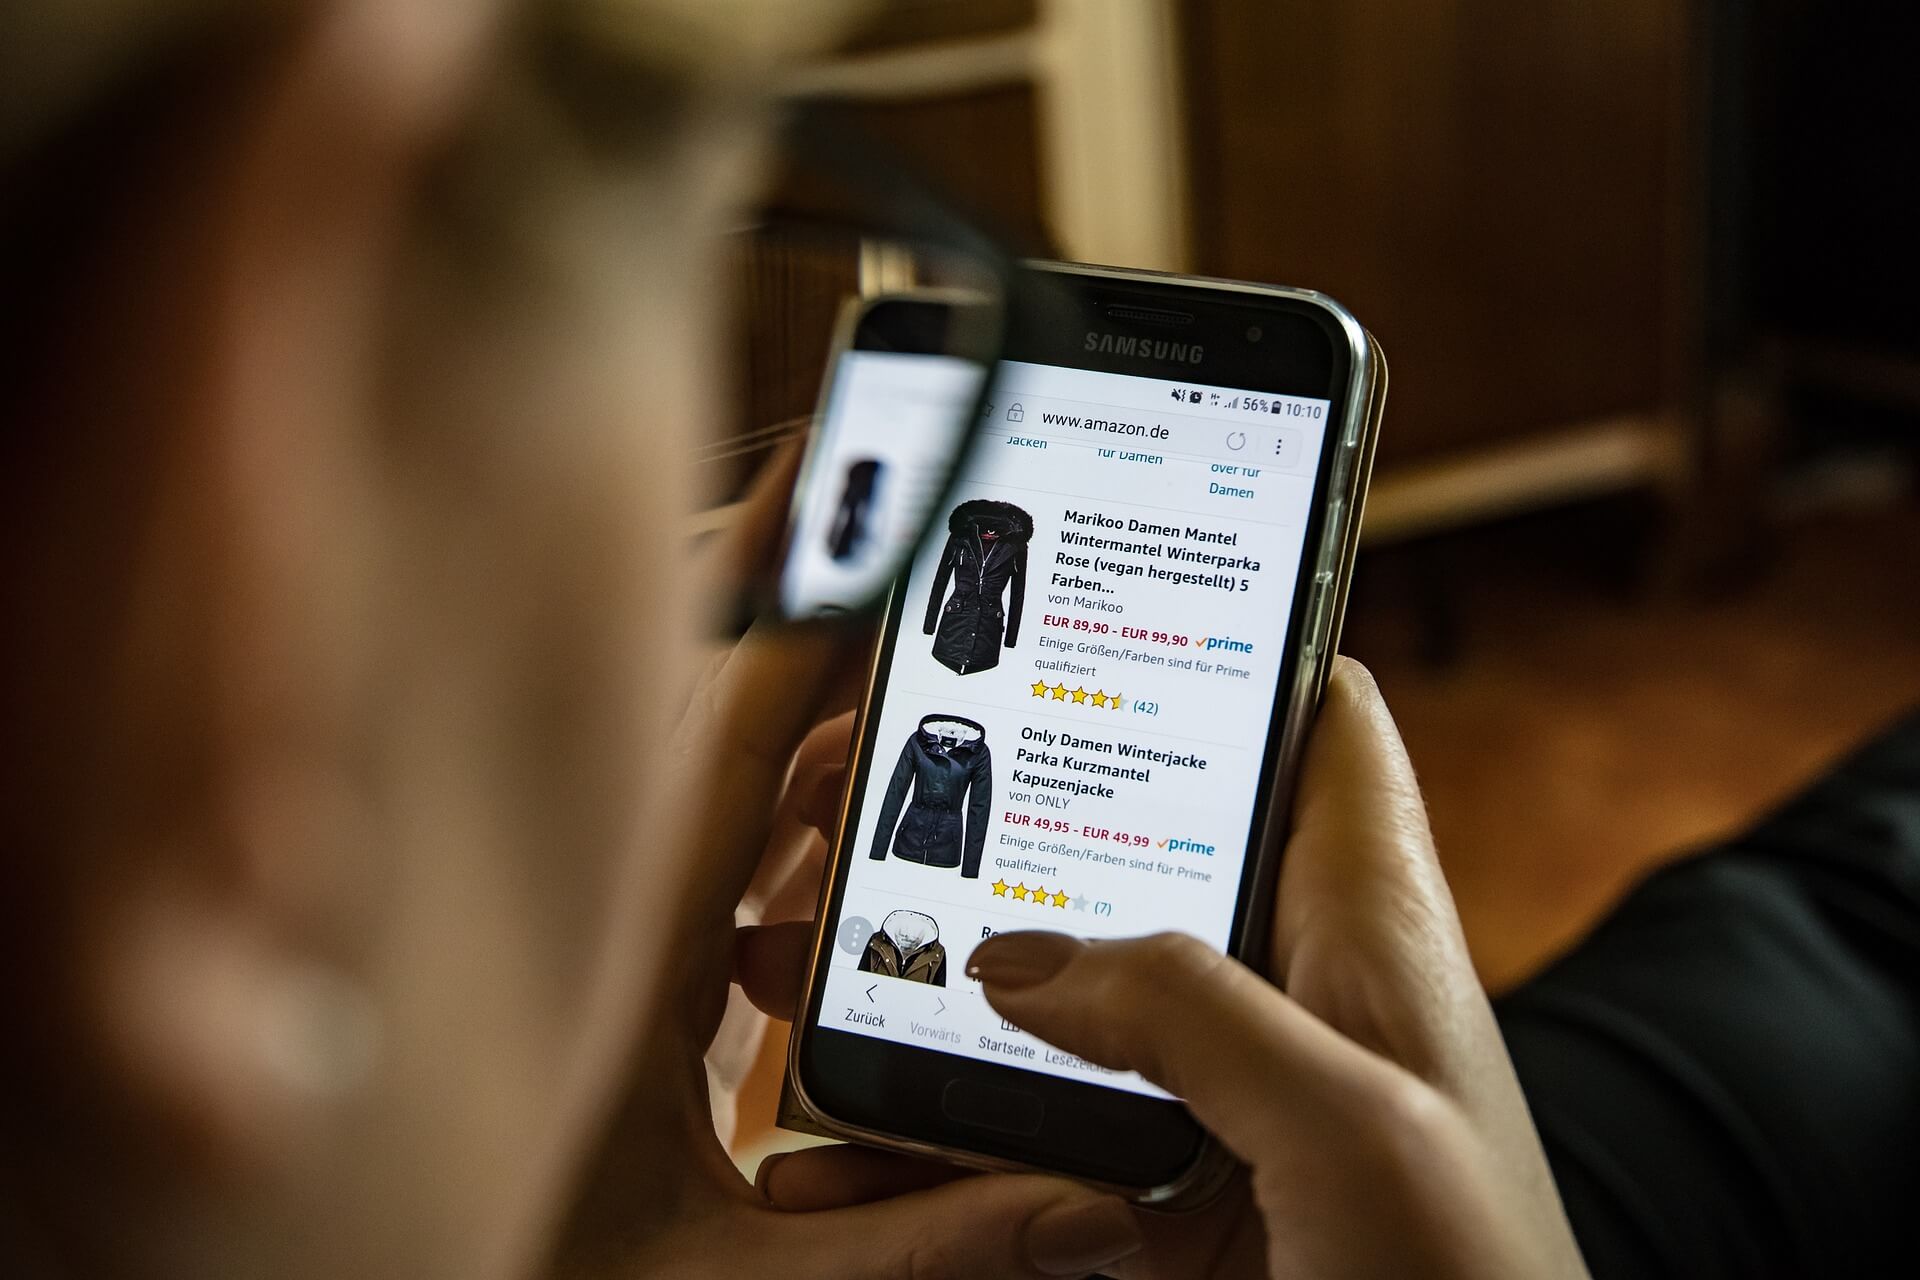 Amazon is helping merchants cash in on mobile commerce